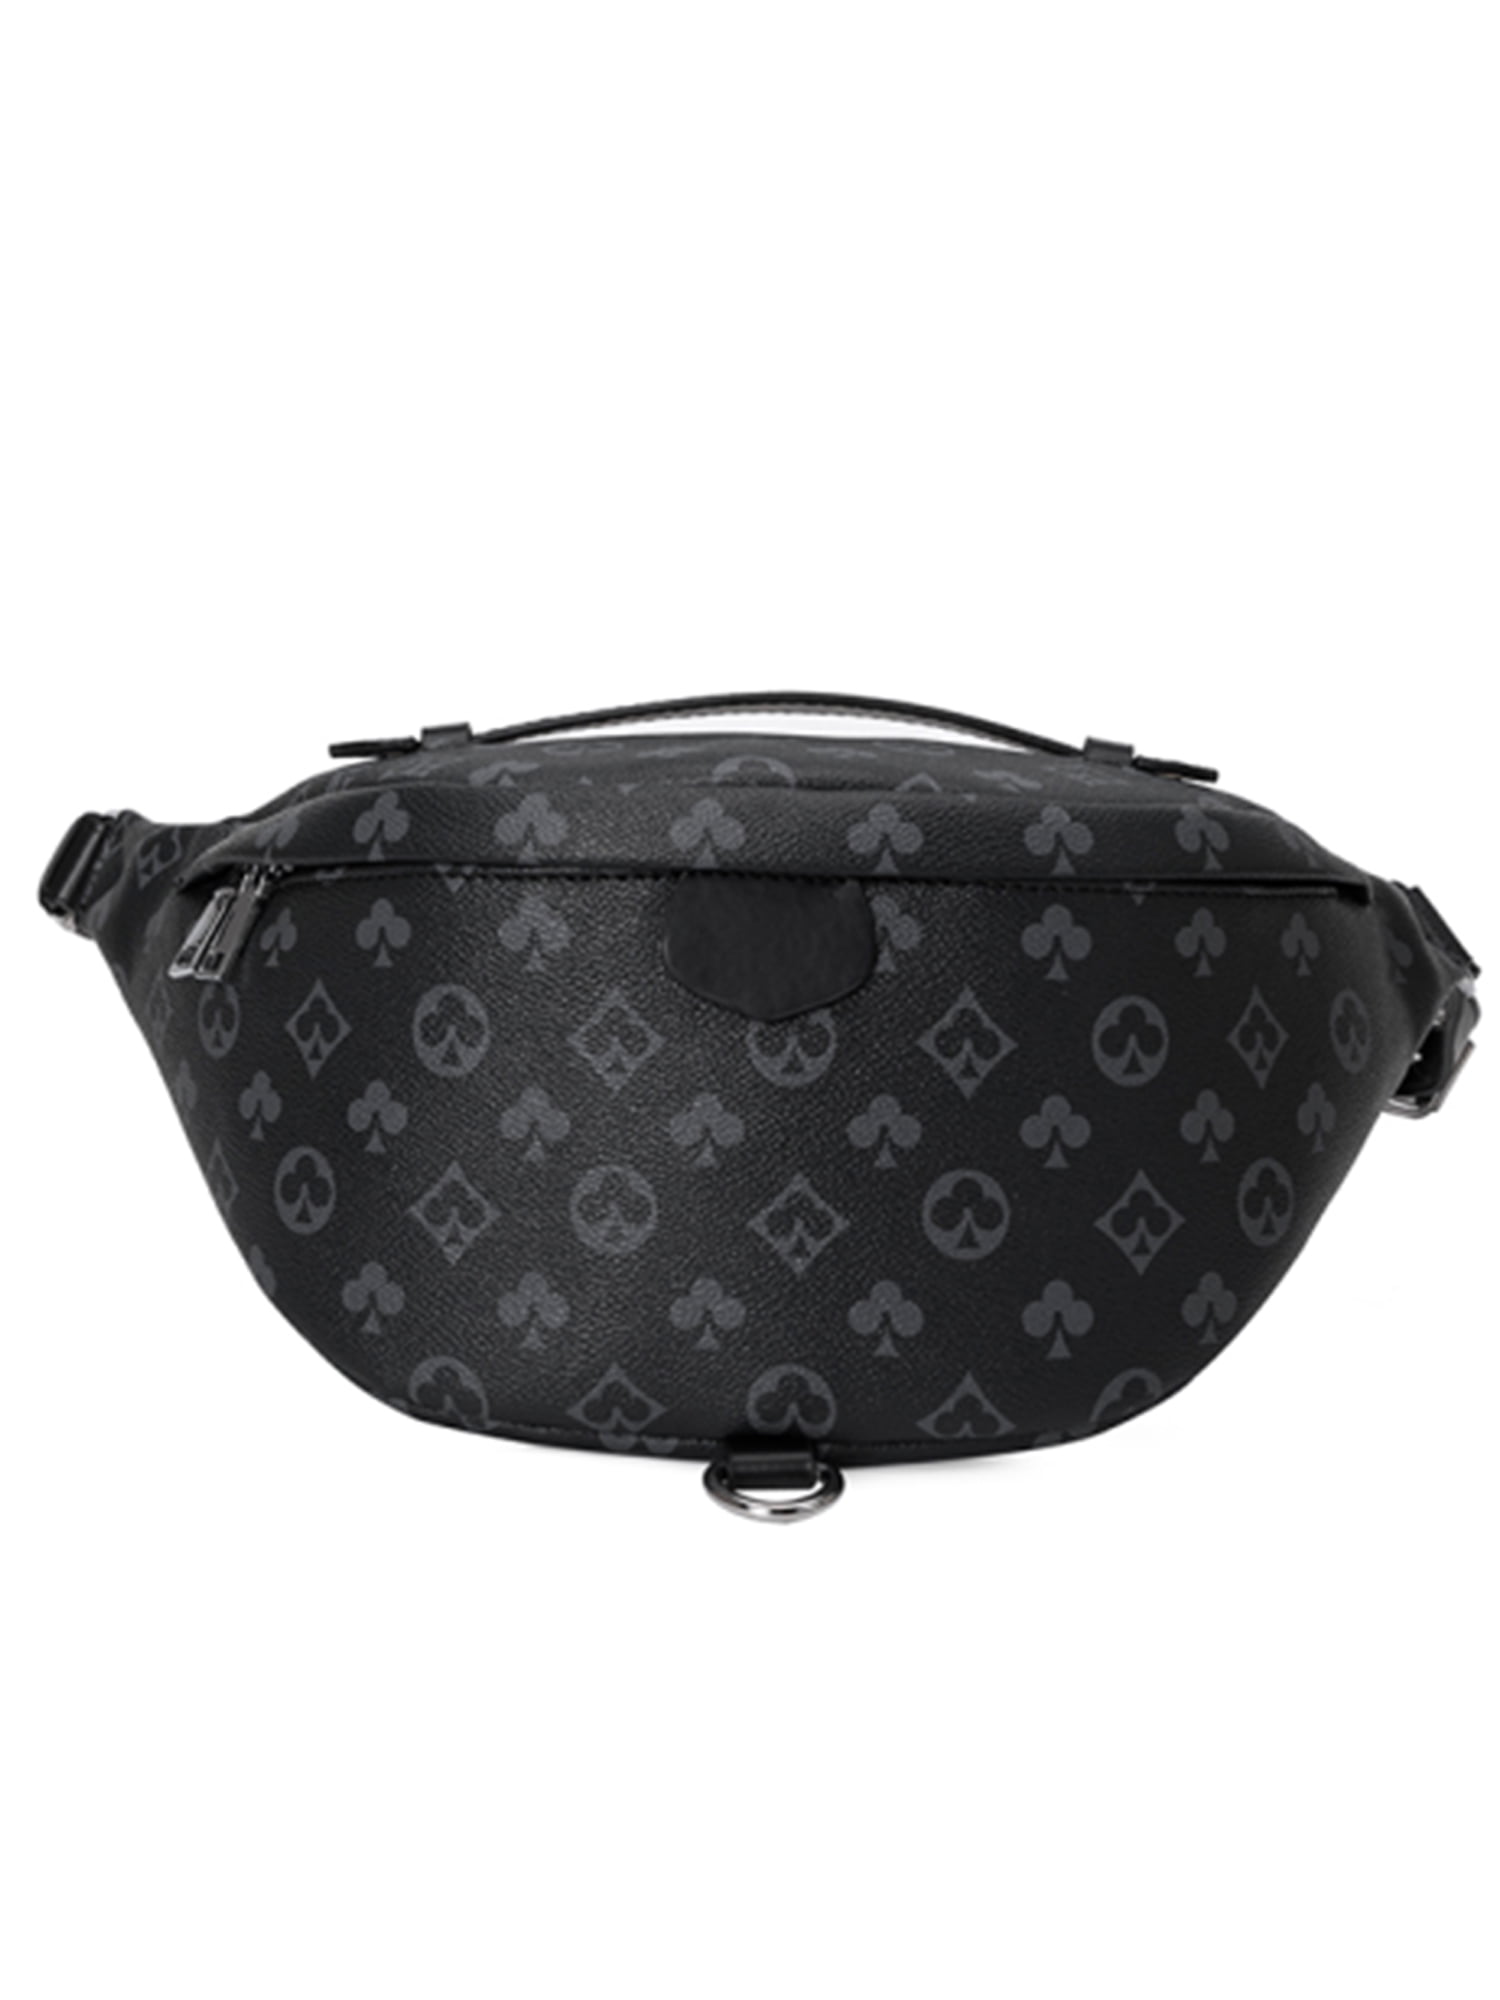 LUXUR Fashion Men Women Bags Belt Bag Checkered Packs Crossbody Pack Bum  Bags,Sling Packs ,Travel Sport Checkered Belt Bags Waist Bag Black Flower